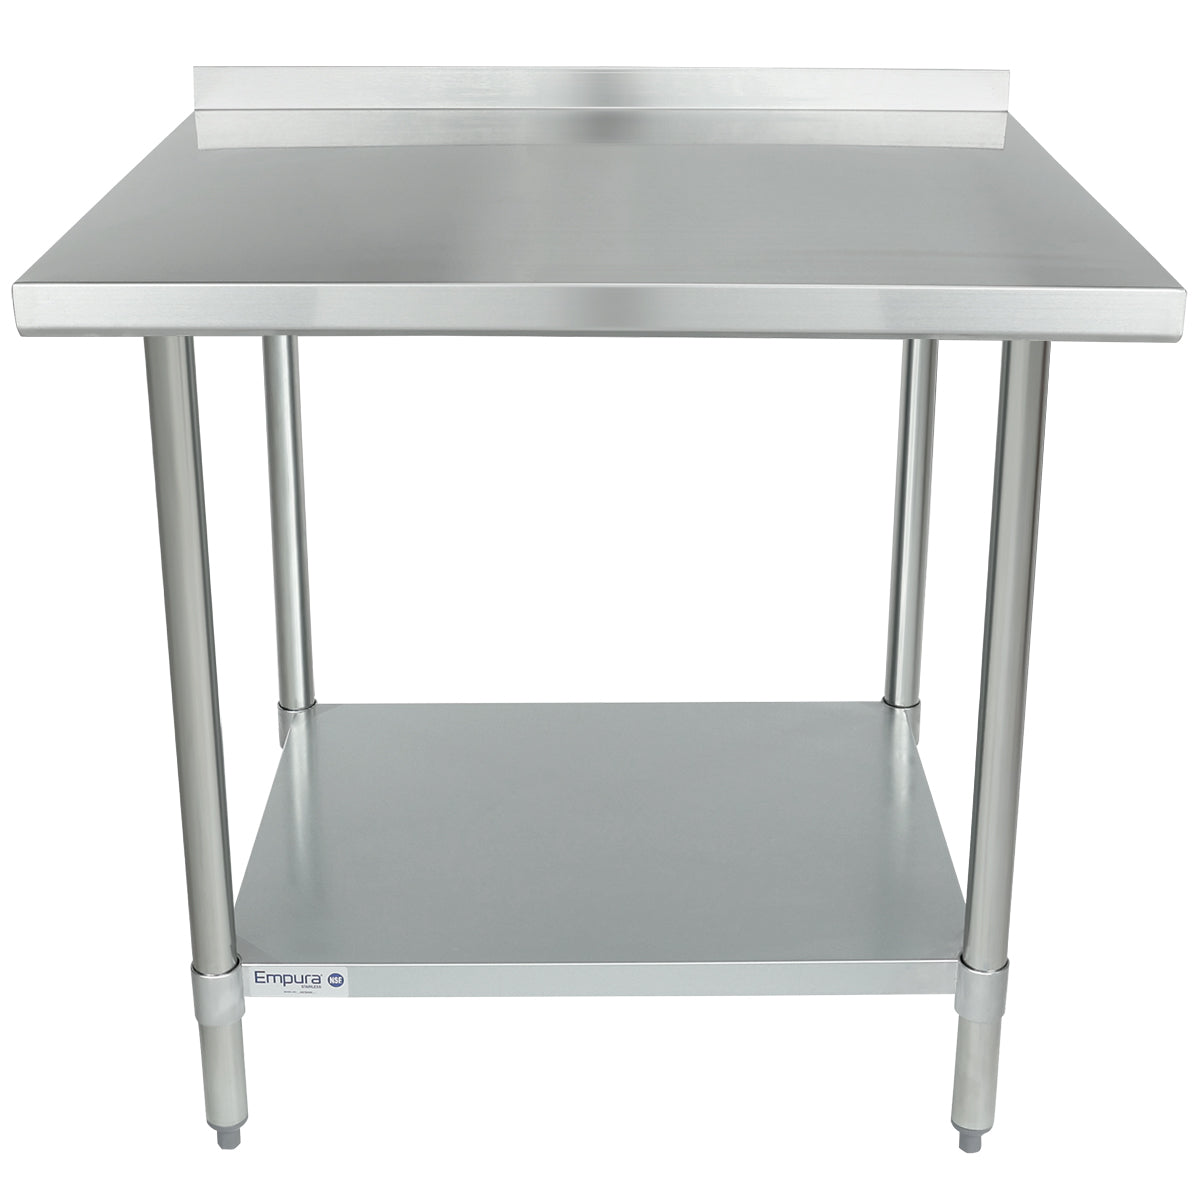 Empura 36" x 30" 18-Gauge 430 Stainless Steel Commercial Work Table with 2" Backsplash Galvanized Legs and Undershelf